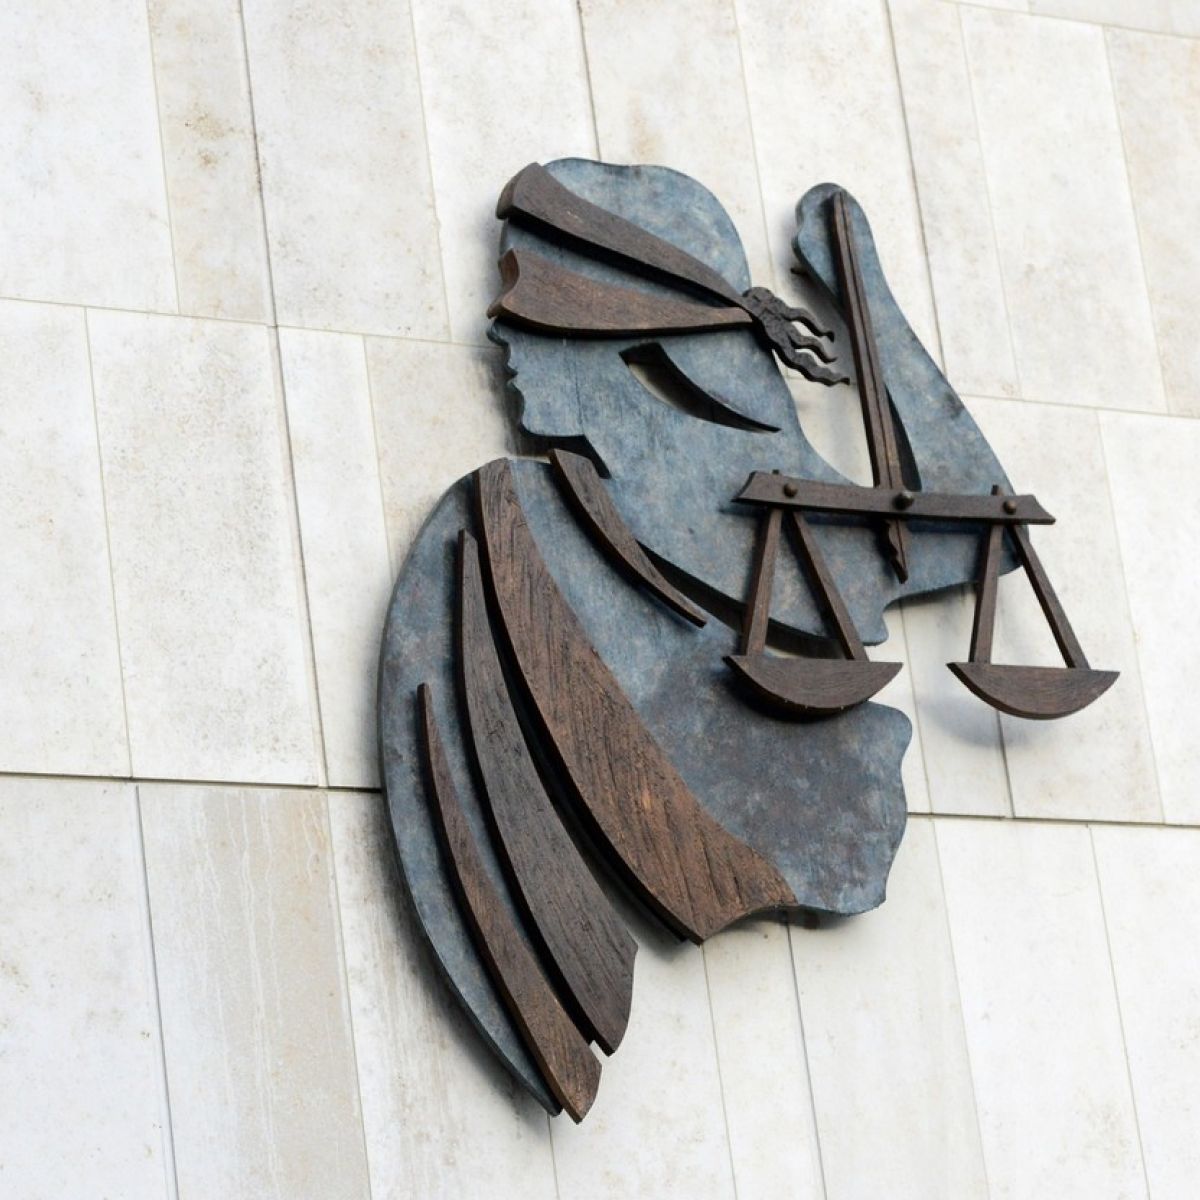 Man Given Ten Year Sentence For Raid On Portmarnock Credit Union